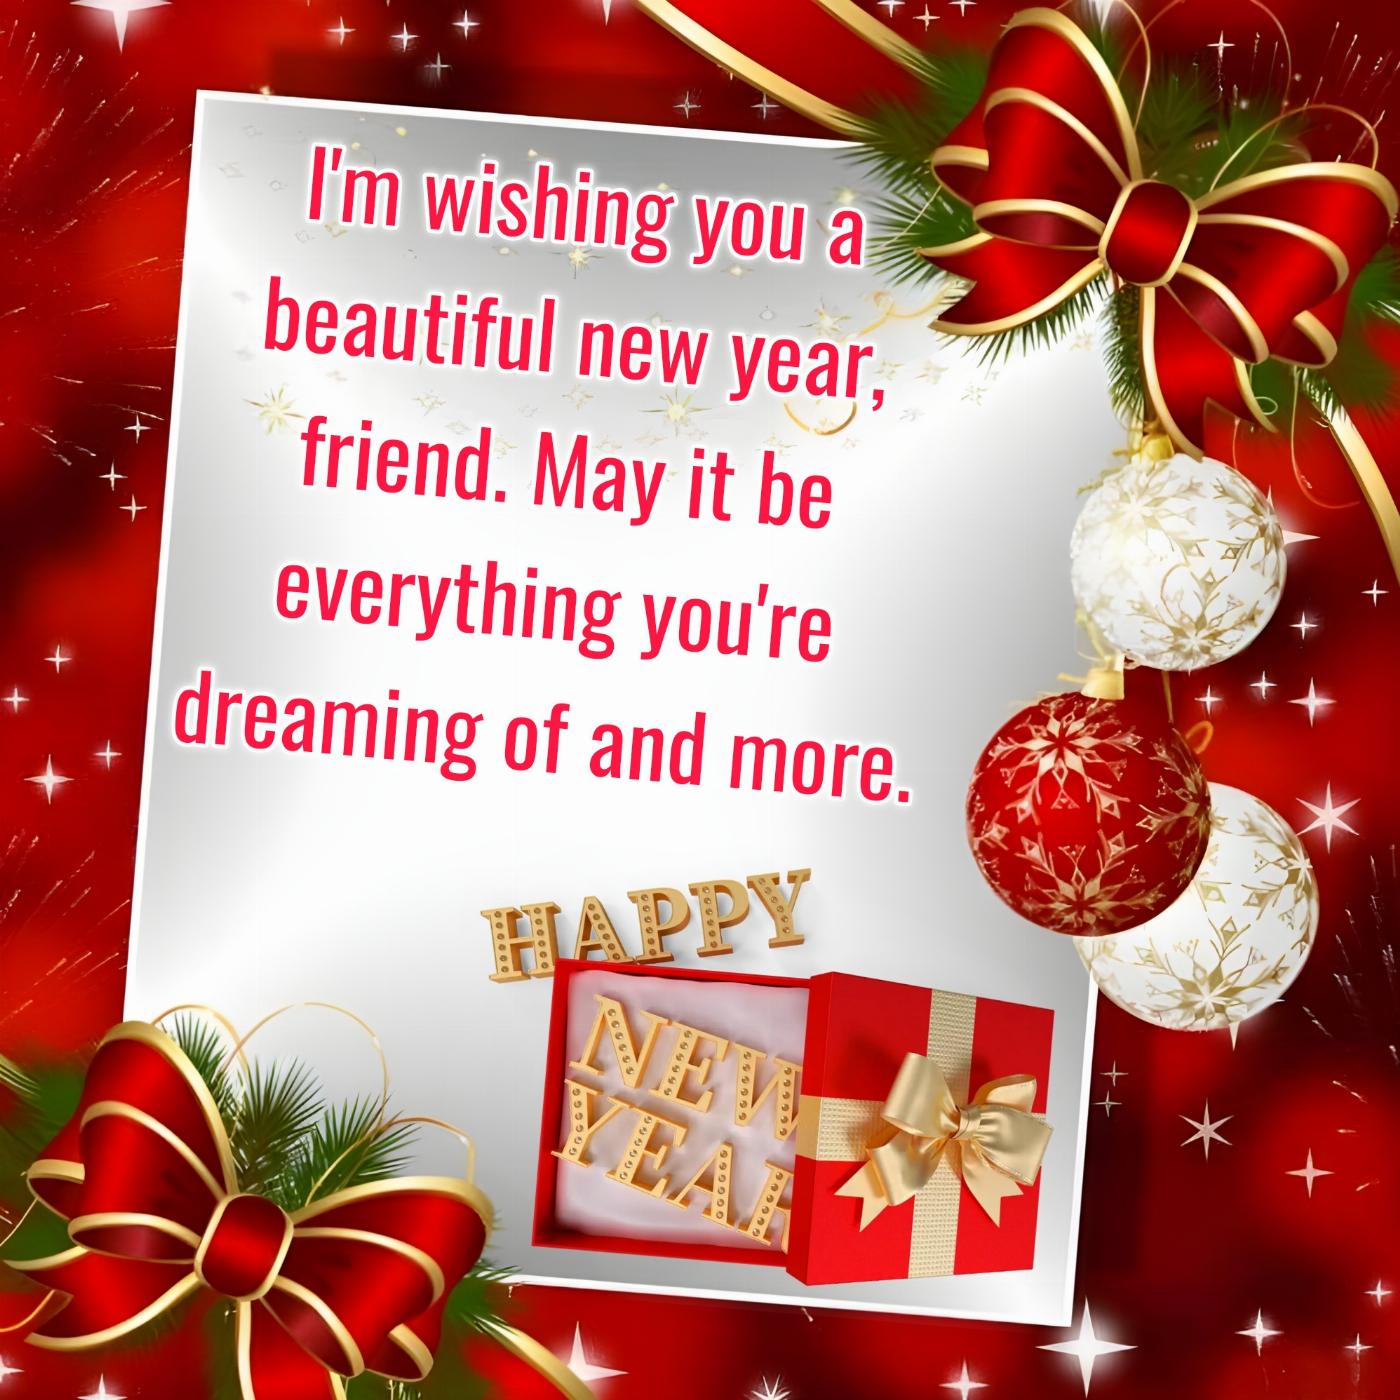 I'm wishing you a beautiful new year friend